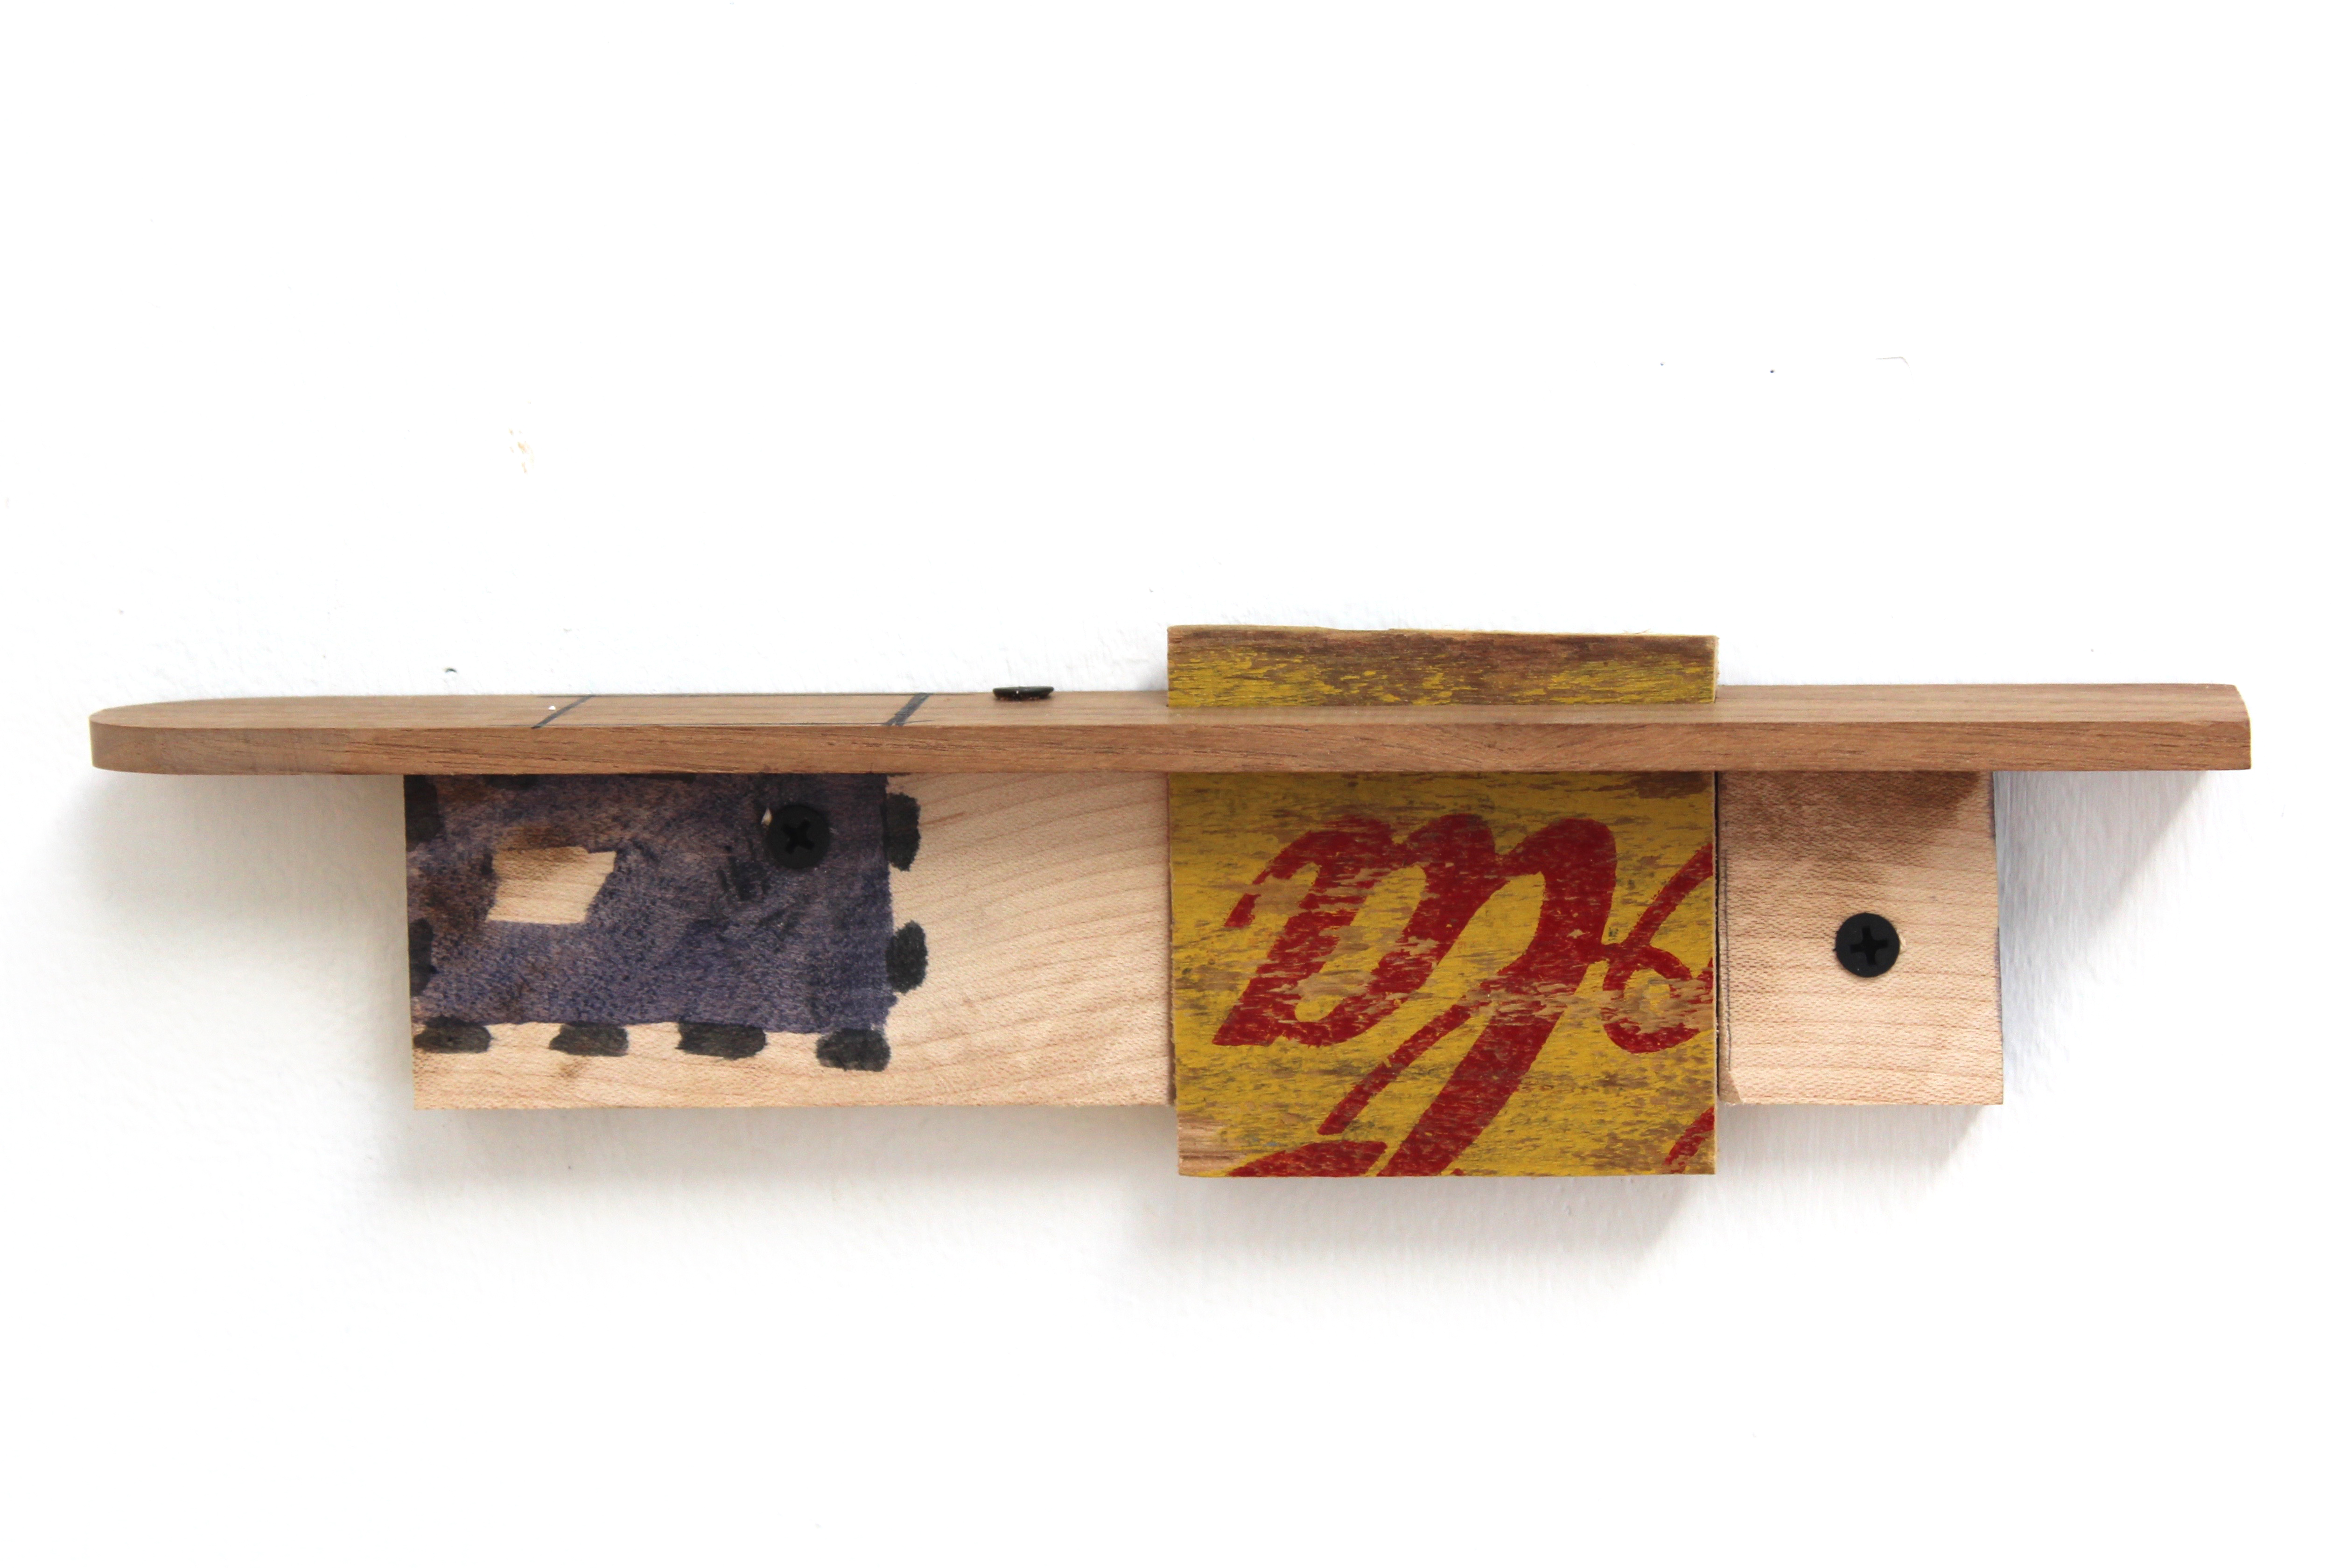 Kevin McNamee-Tweed.<em> Lorca Shelf</em>, 2019. Ink on wood with affixed found wood, 3 x 11 x 1 1/4 inches (7.6 x 27.9 x 3.2 cm)